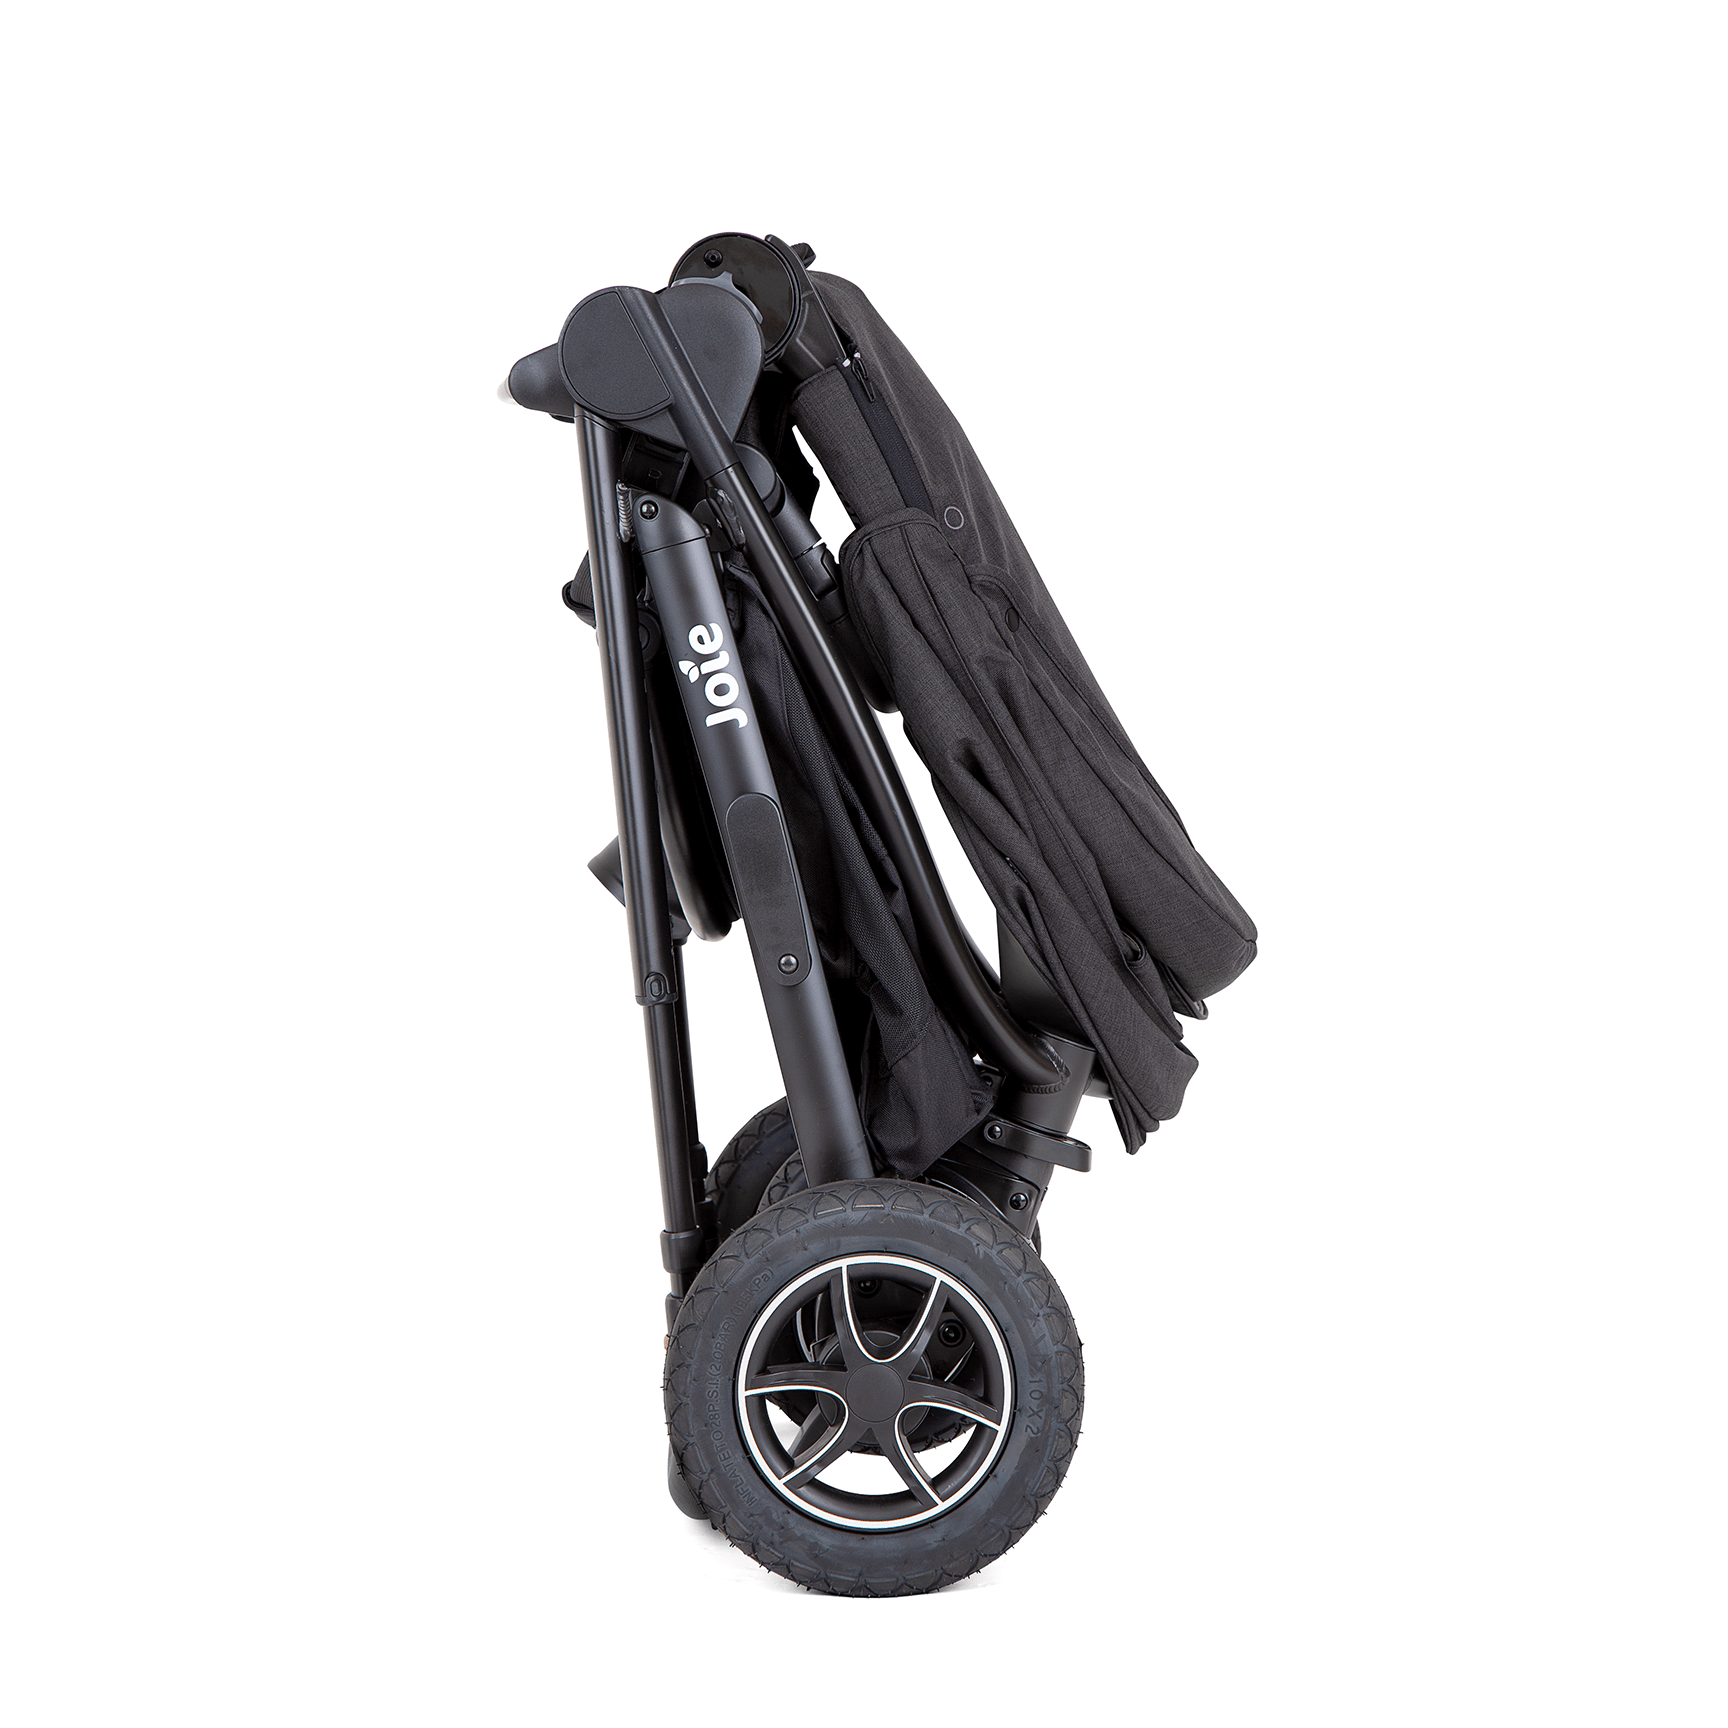 Joie Pushchairs & Buggies Joie Versatrax Stroller - Shale S1803EASHA000